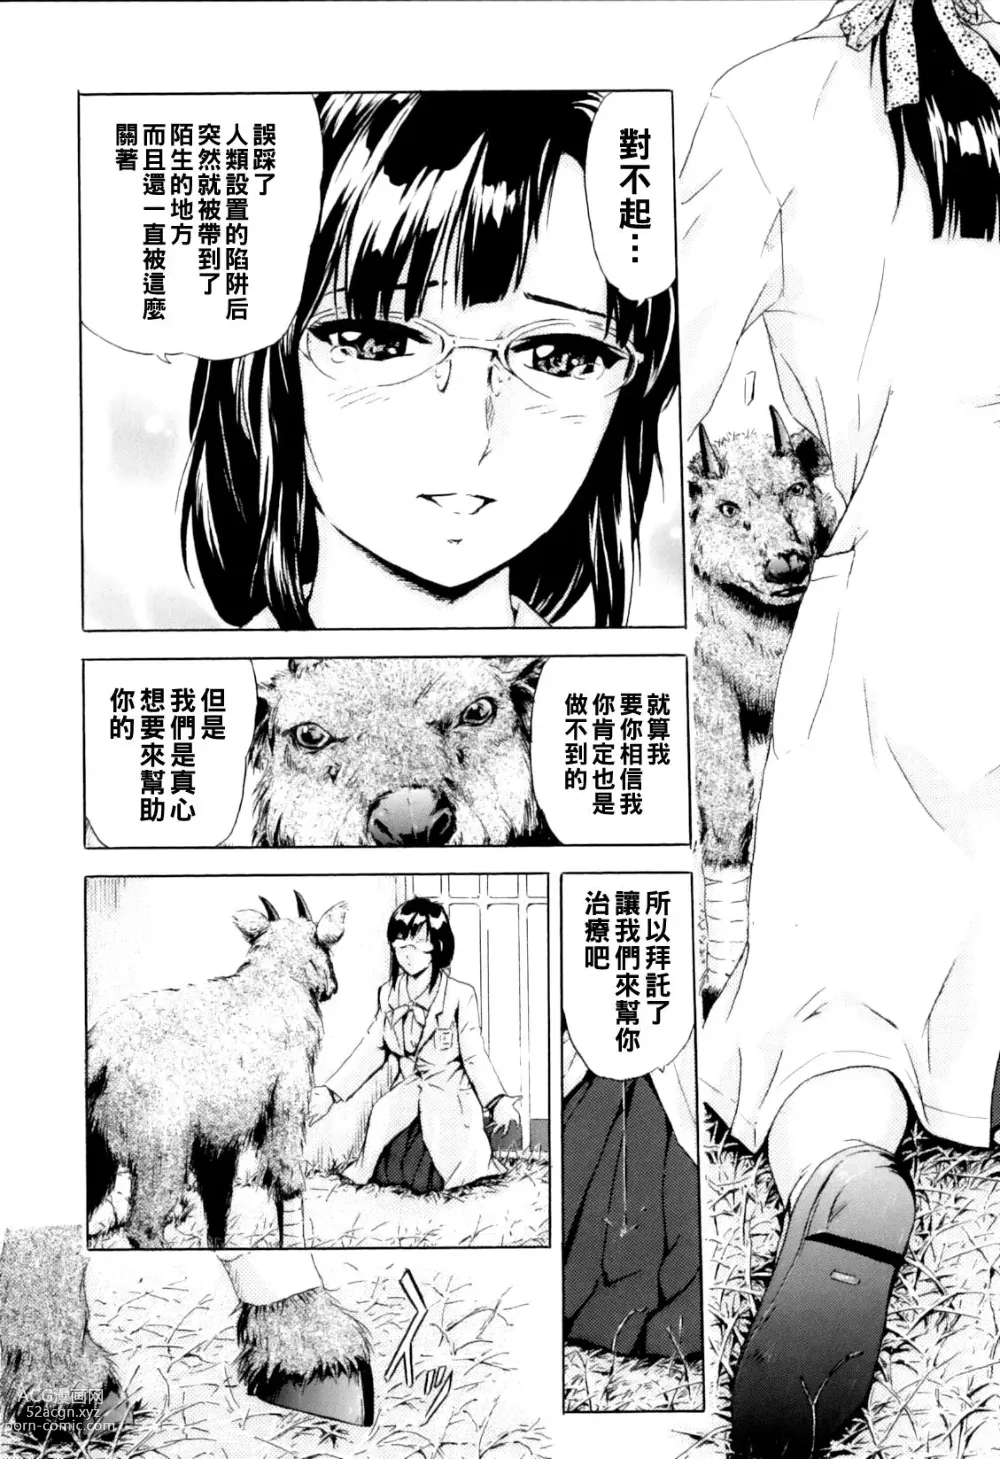 Page 4 of manga Tokubetsu Tennen Kinenbutsu - Special Natural Monuments